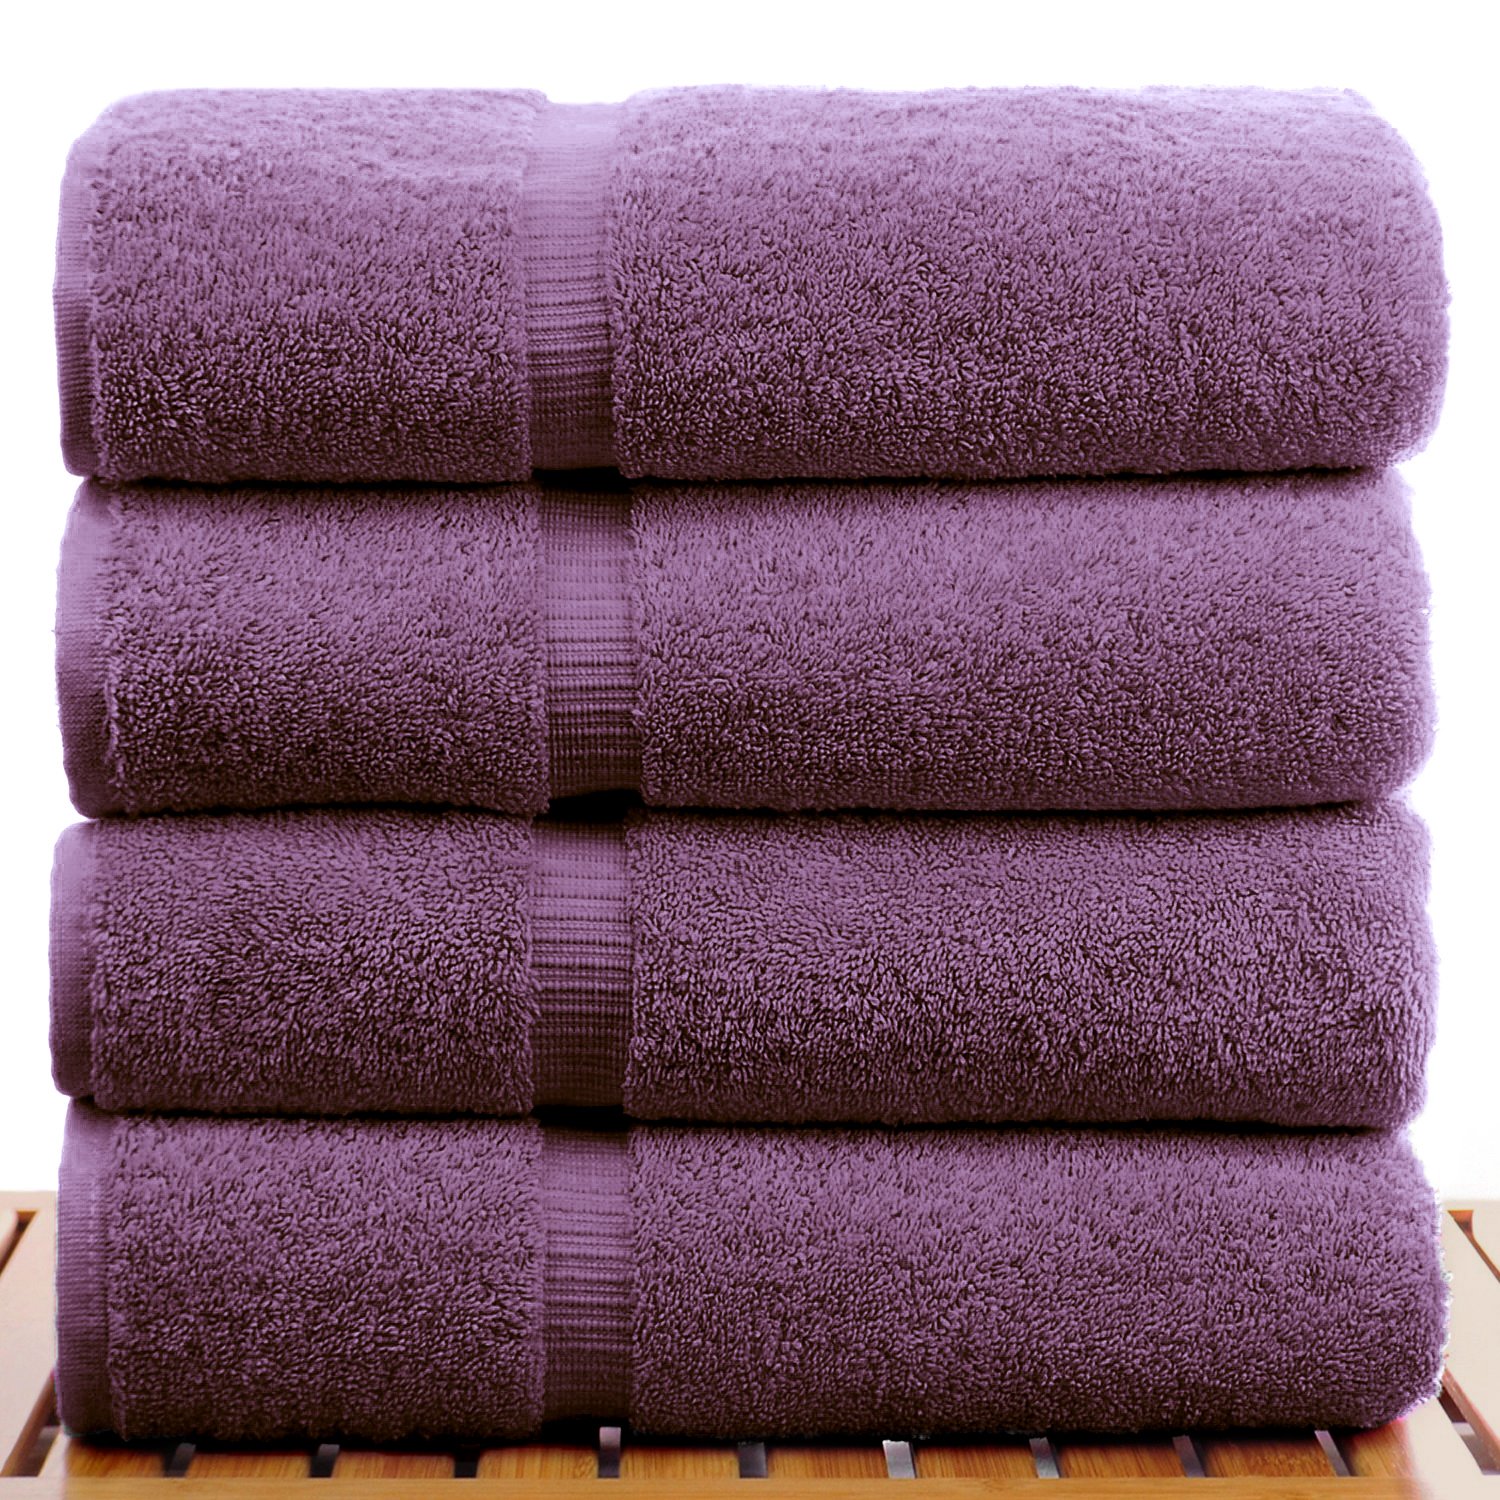 27" x 54" - 17 lbs/doz - %100 Turkish Cotton Plum Bath Towel - Dobby Border-Robemart.com